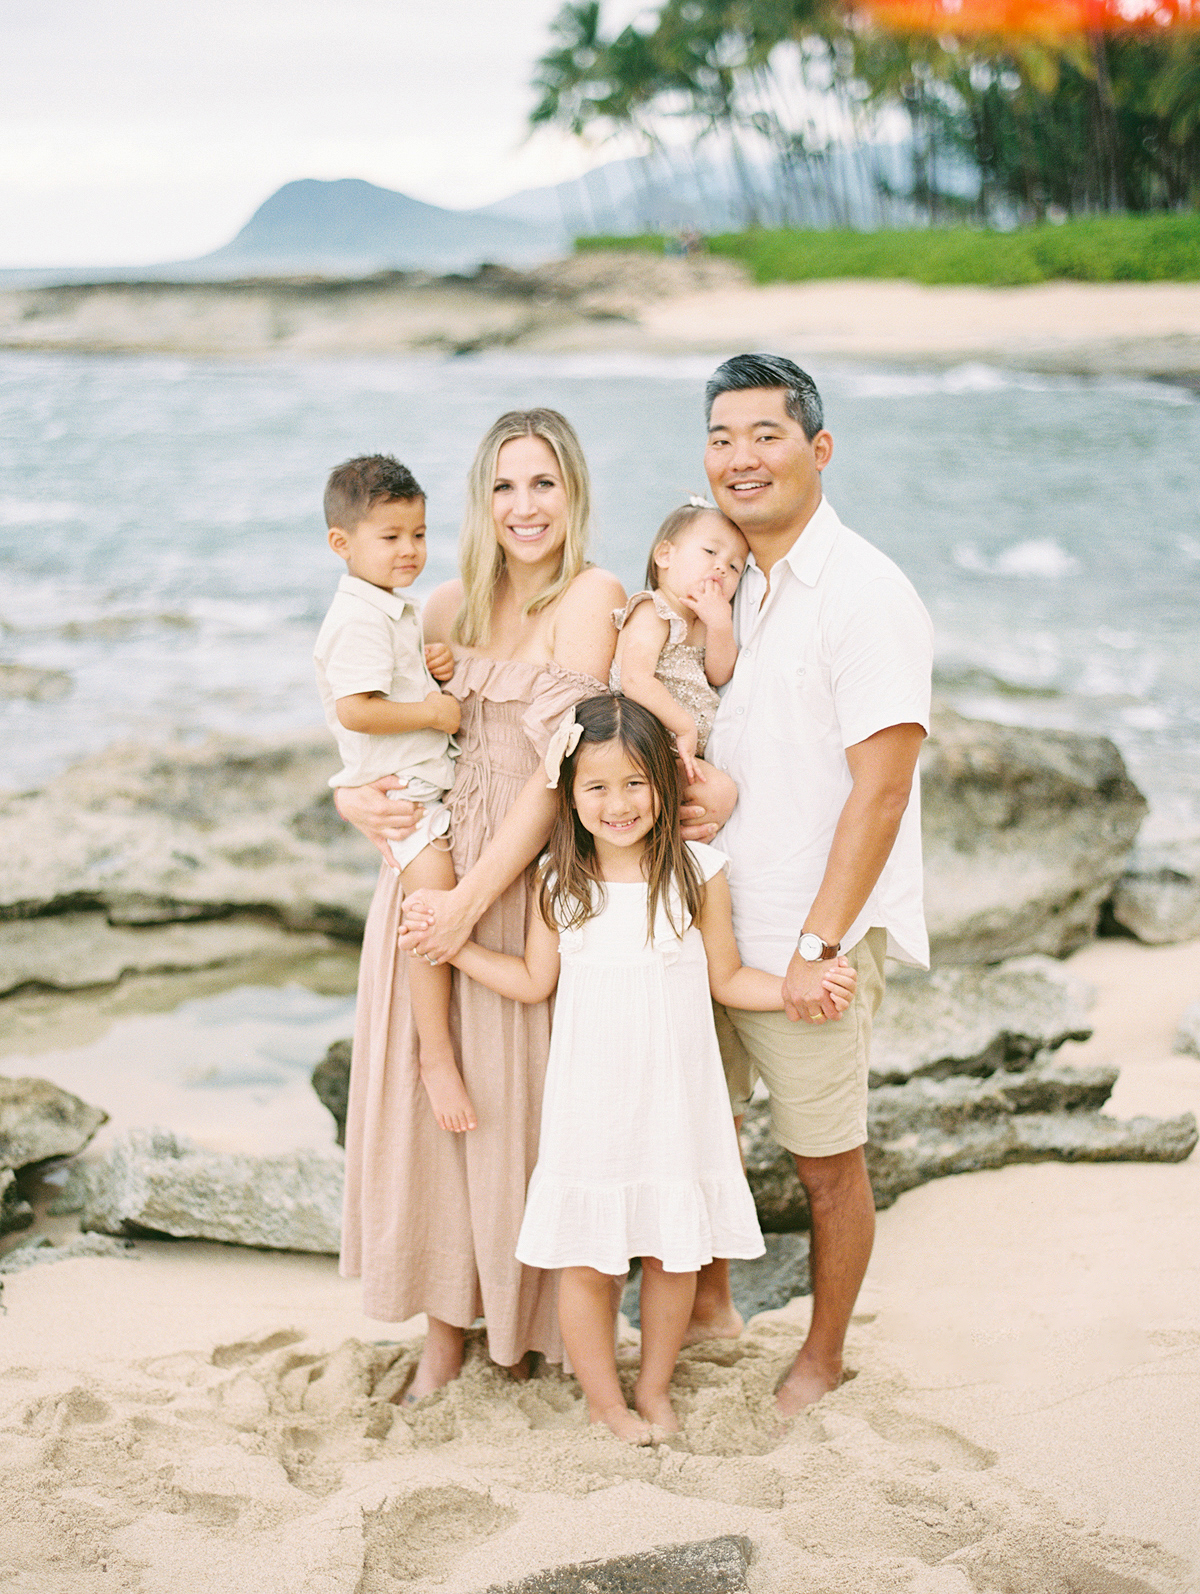 Oahu family film photography by Laura Ivanova